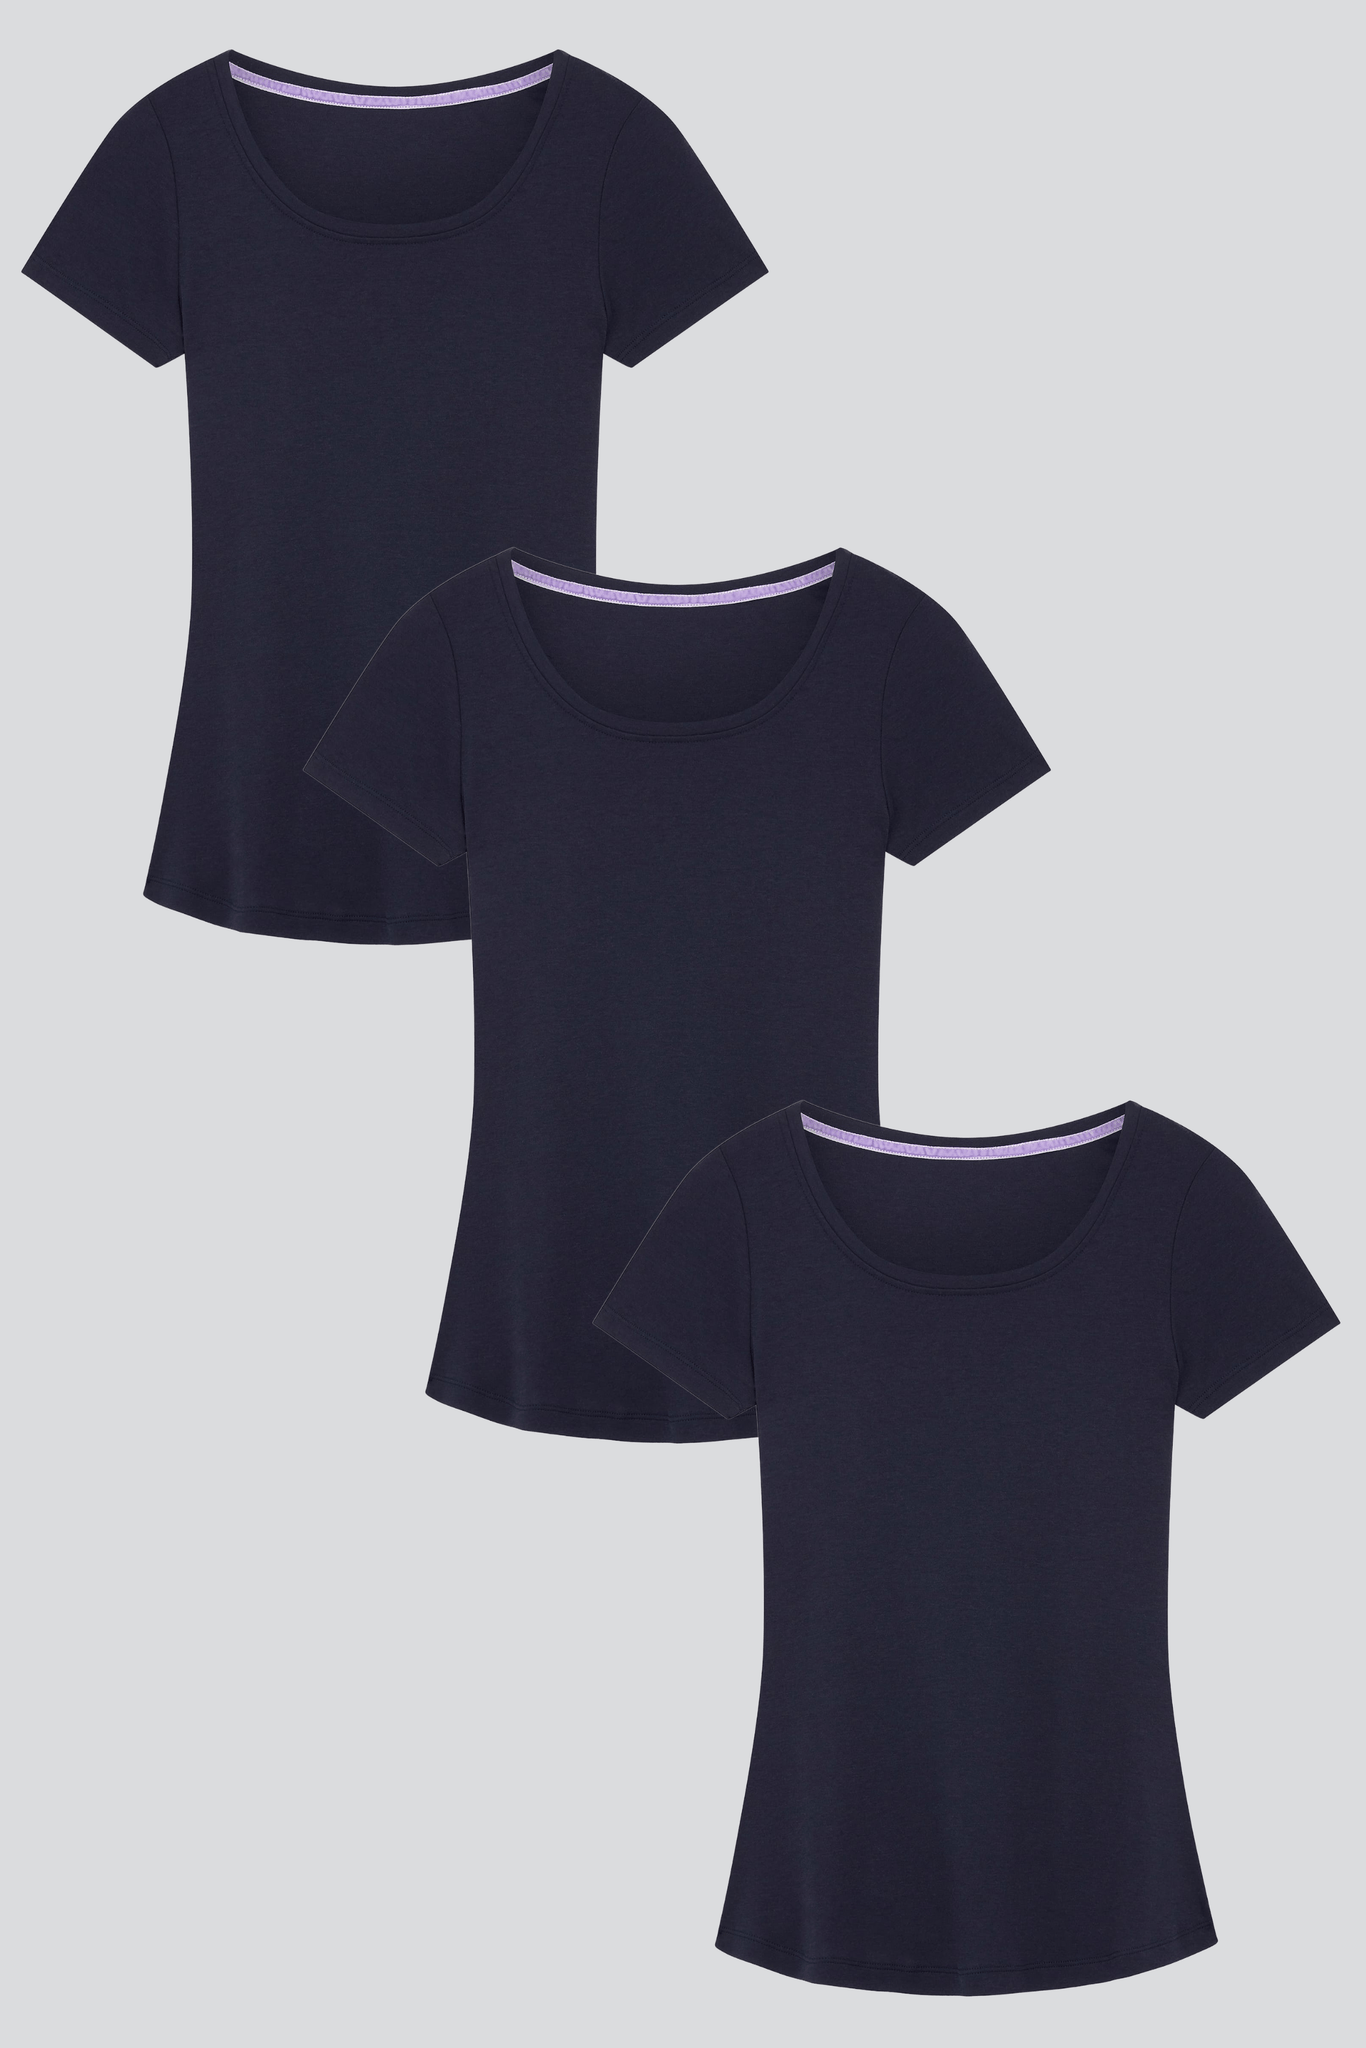 Women's Short Sleeve Scoop T-shirt Bundle - Navy Short Sleeve T-shirt Multi Pack - Core Essential T-Shirts - Lavender Hill Clothing